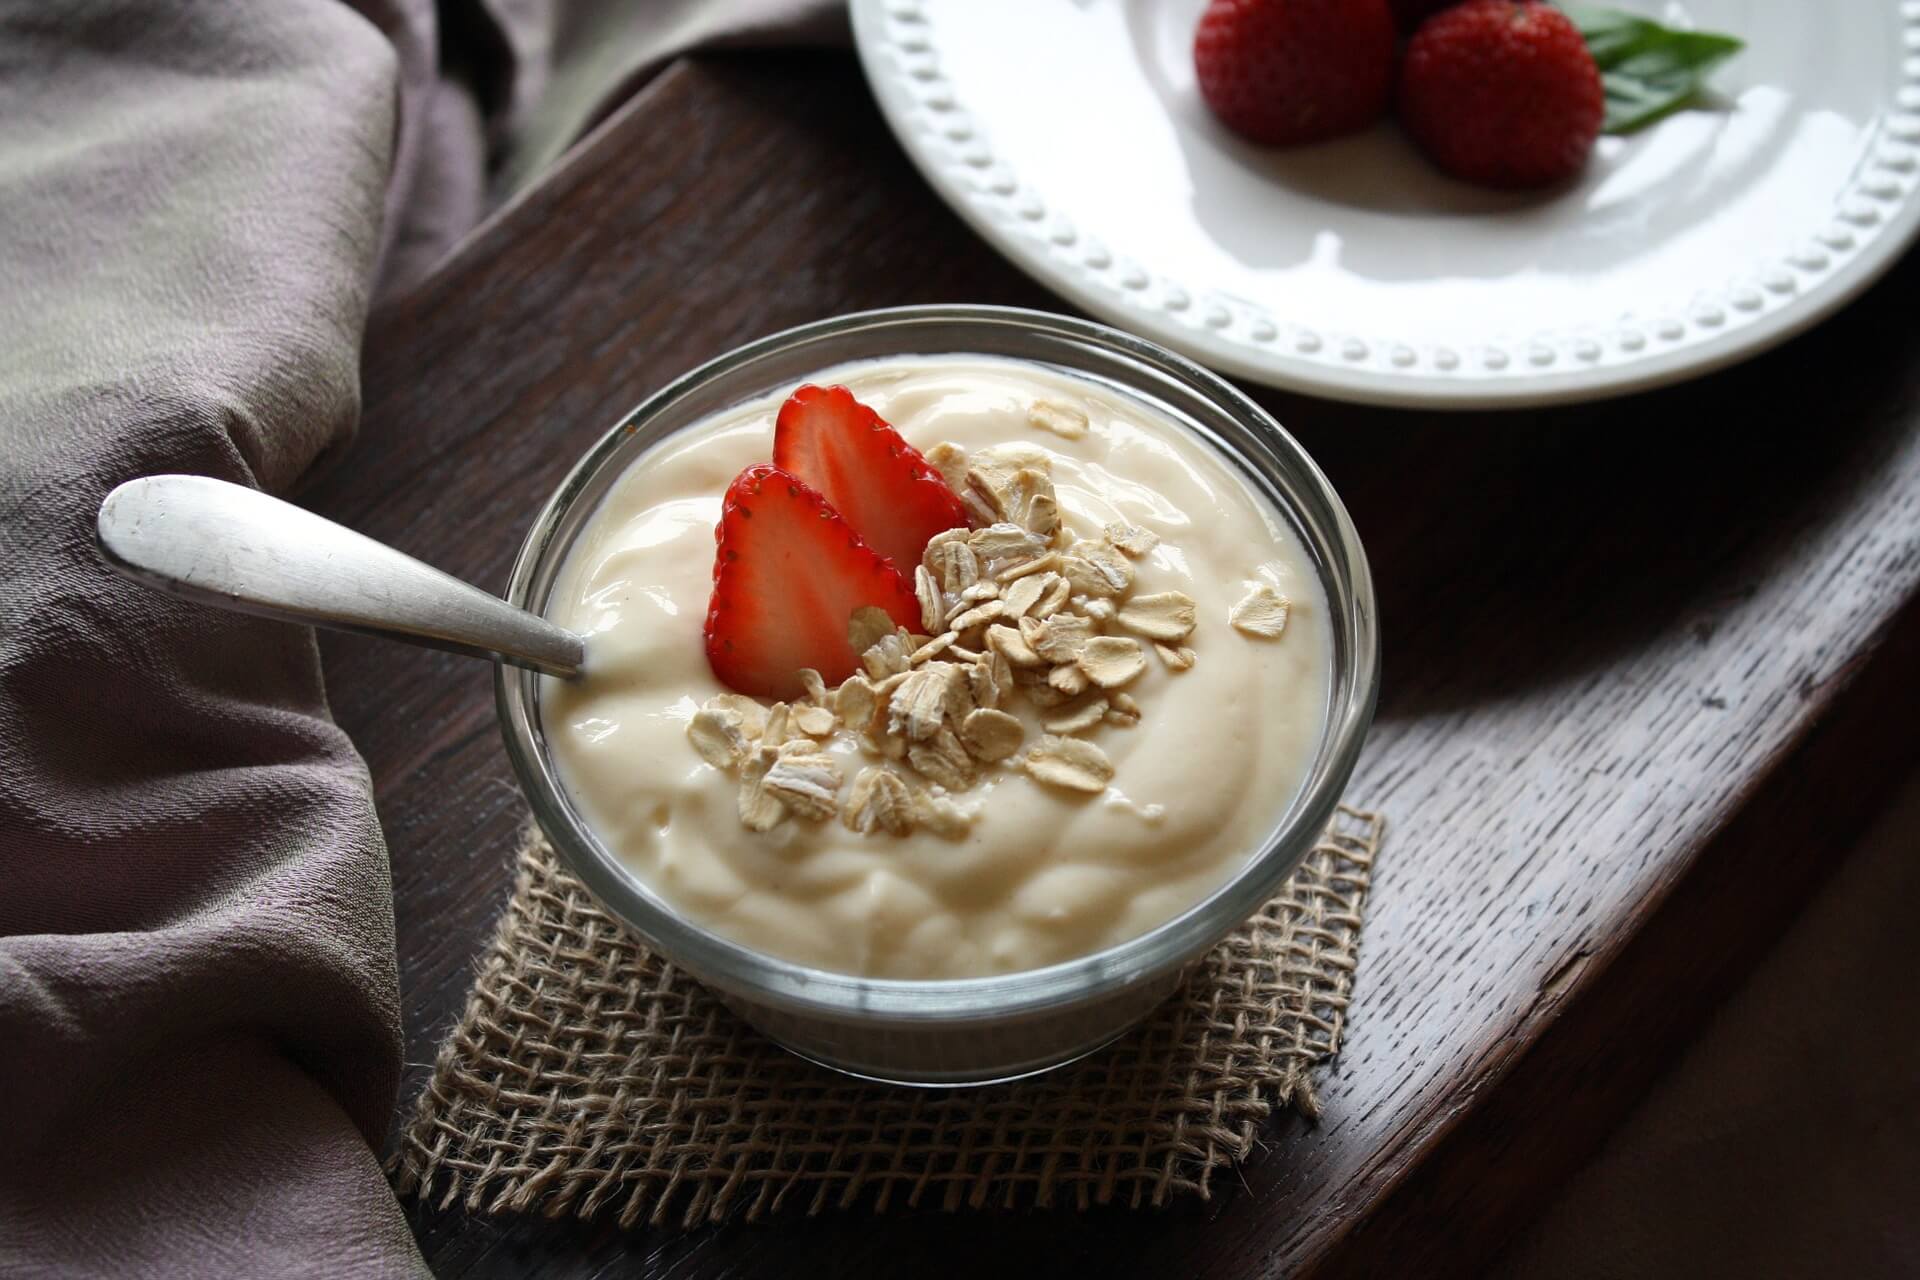 a bowl of yogurt and strawberries